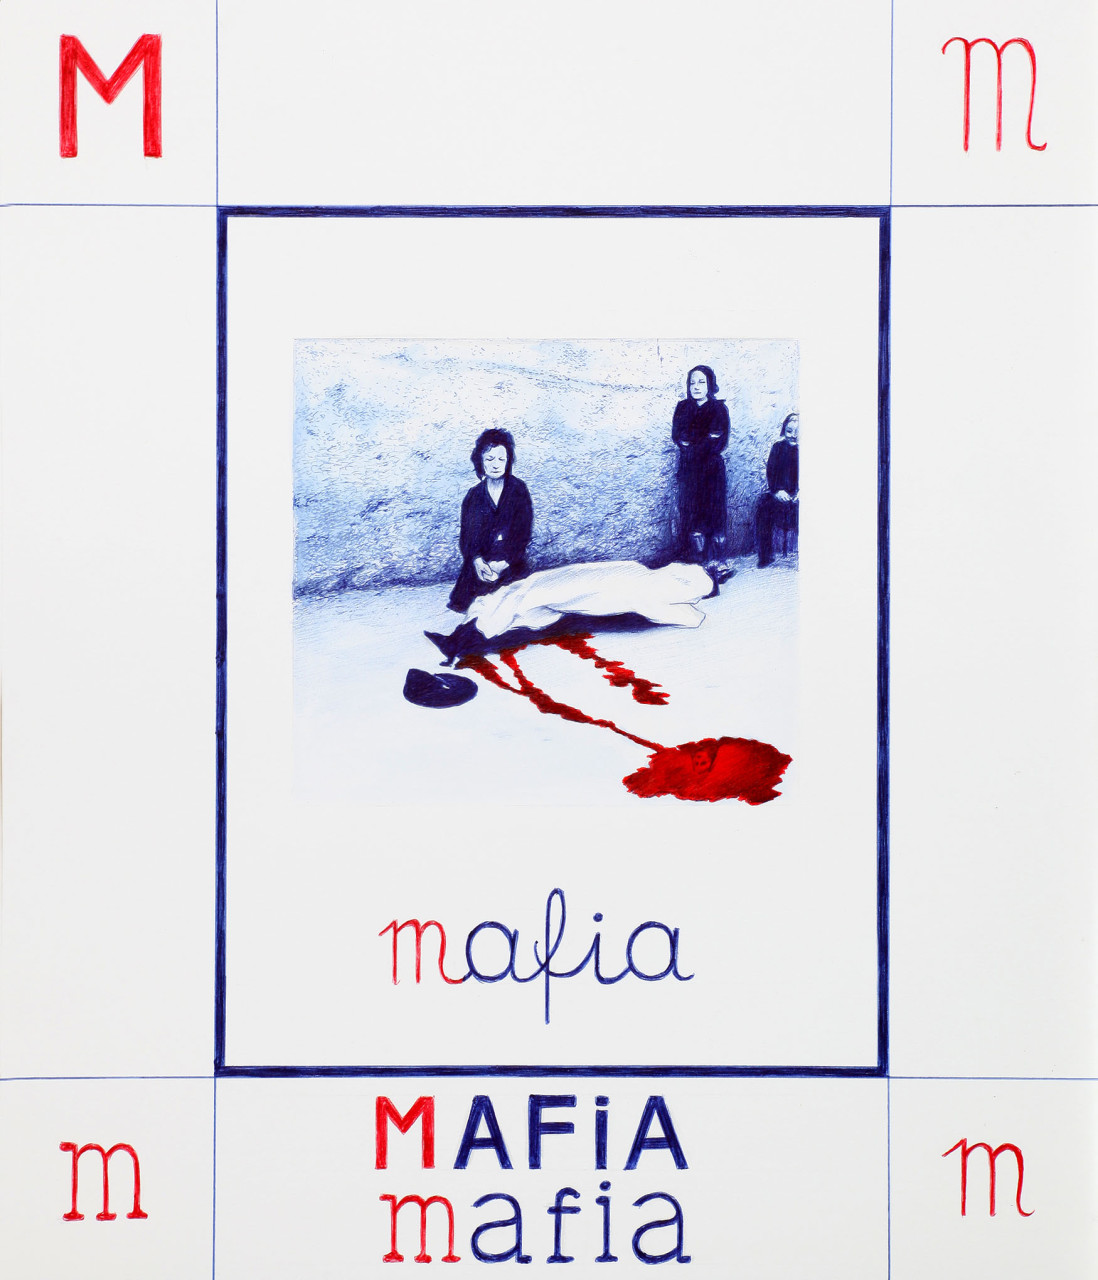 11M-mafia_bassa